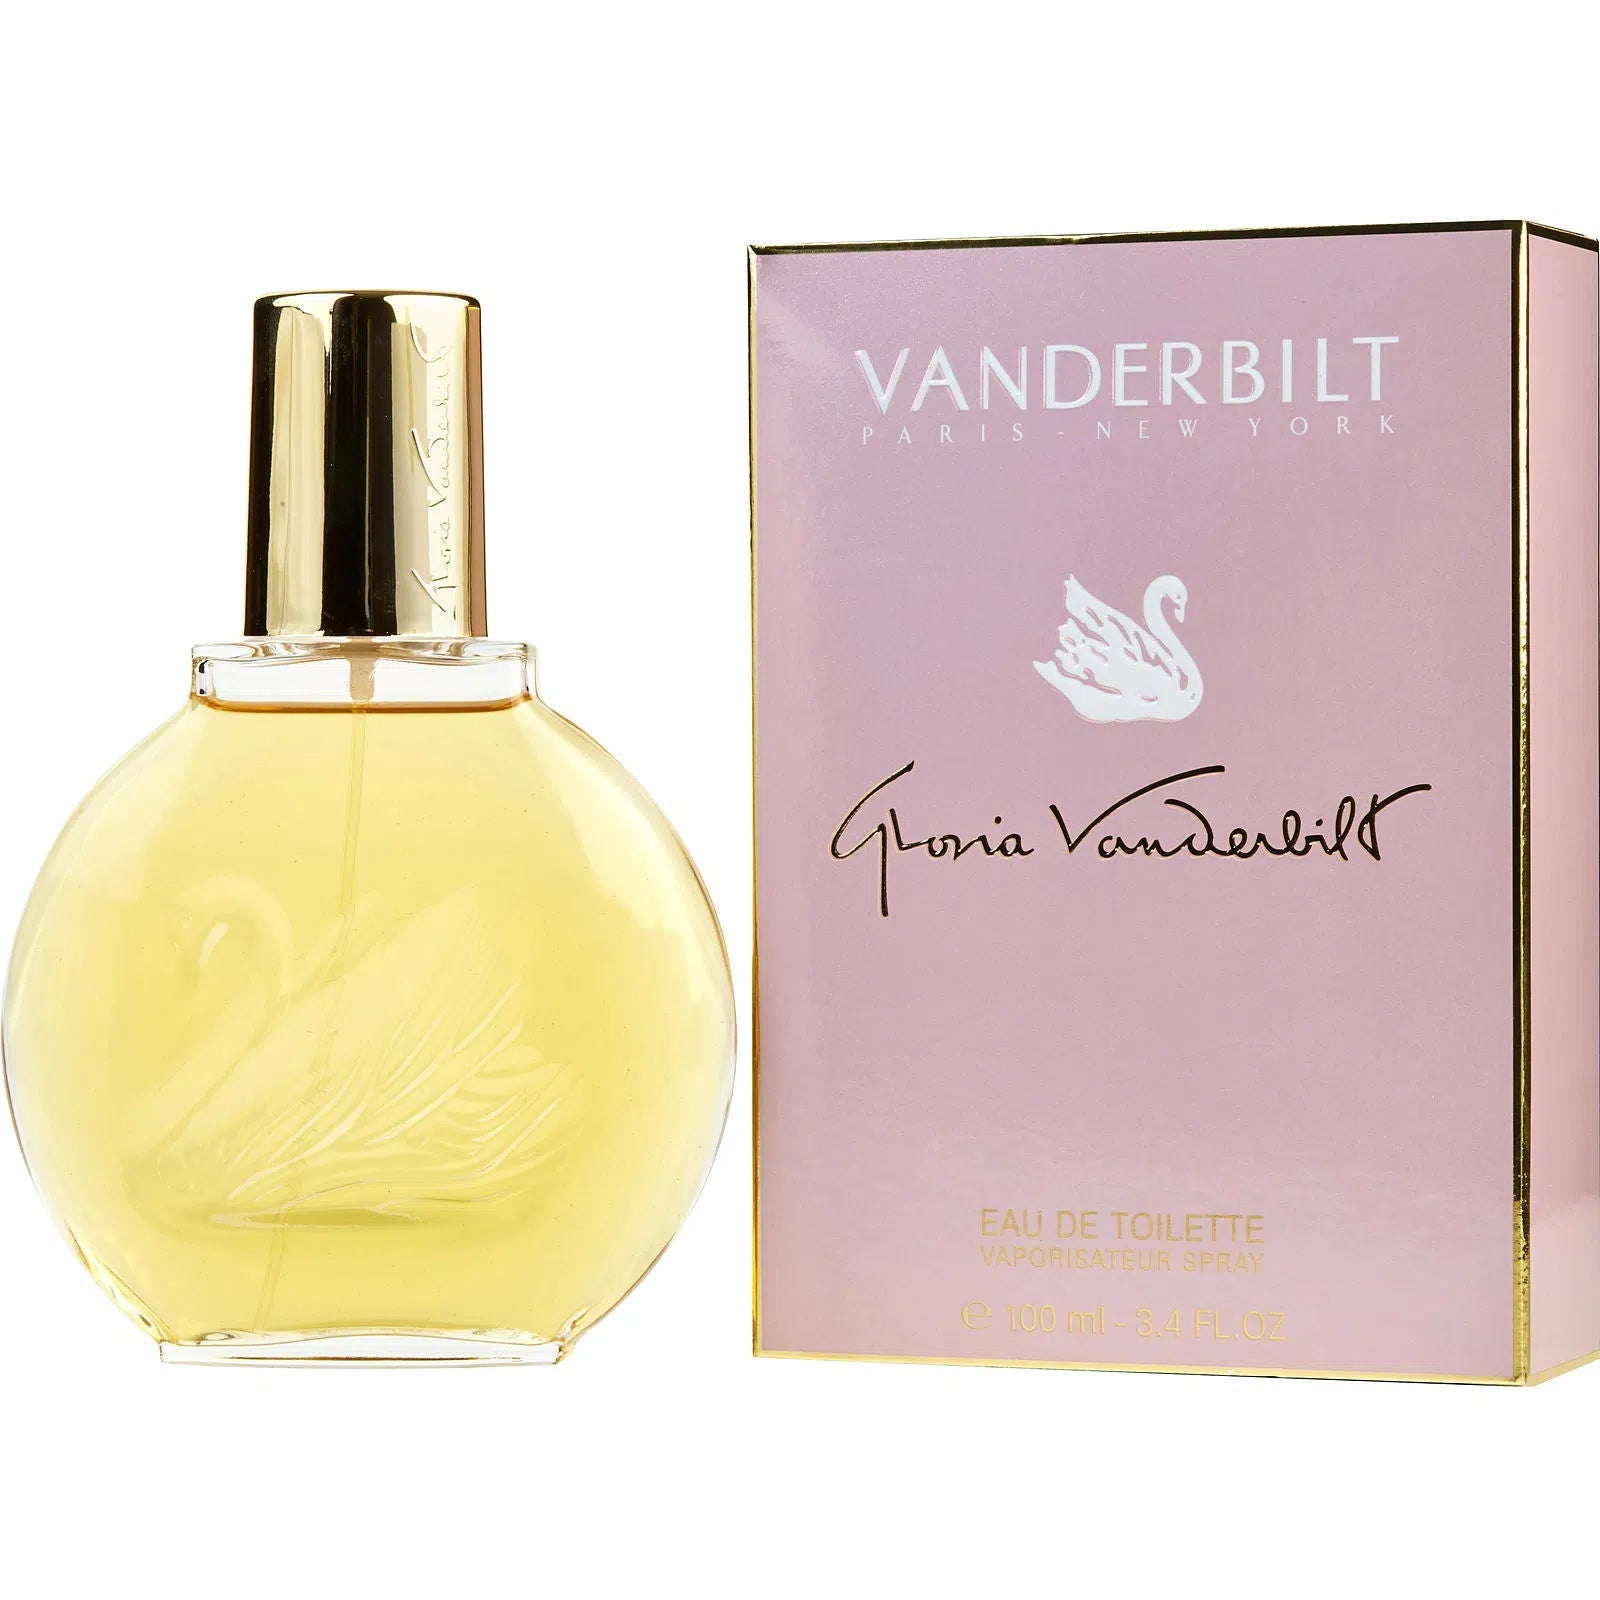 Perfume Gloria Vanderbilt Vanderbilt EDT (W) / 100 ml - 3357554720012- Prive Perfumes Honduras